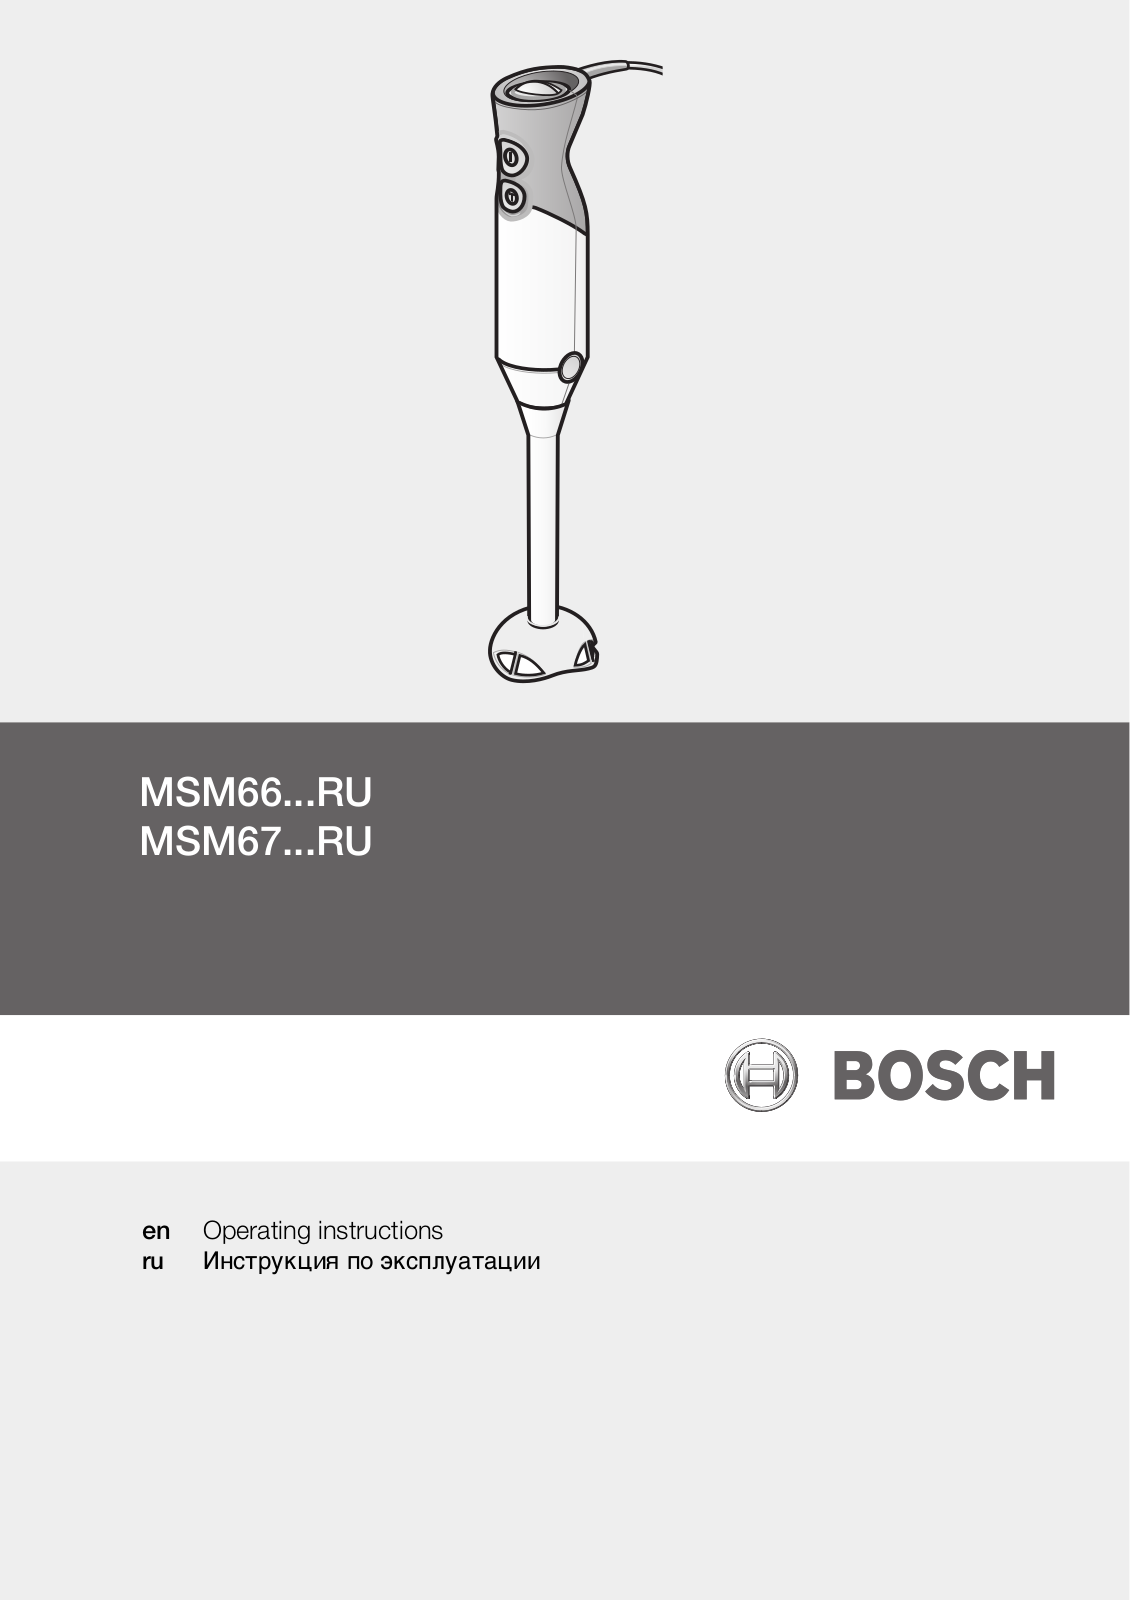 Bosch MSM 67140 RU User Manual